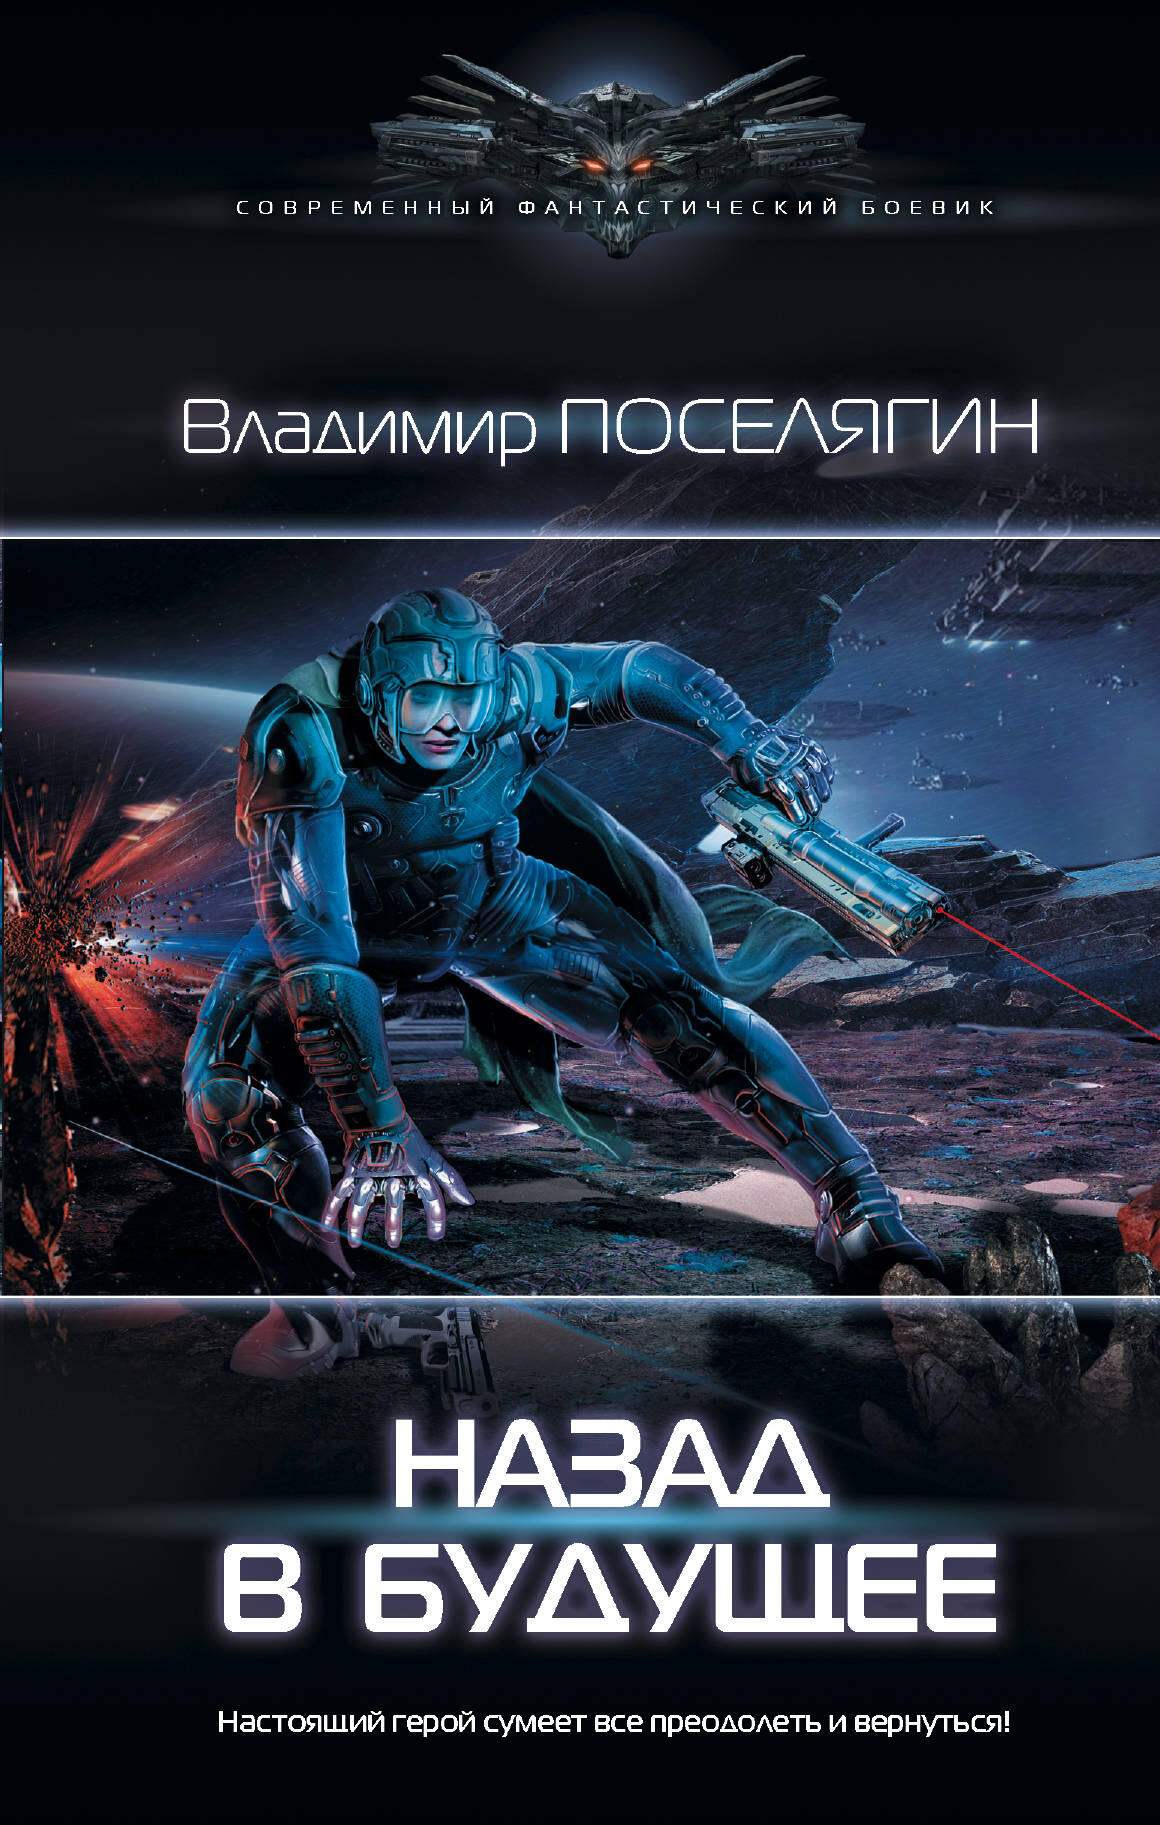 ru Krasnogorie Dinokok FictionBook Editor Release 266 20190208 - фото 1